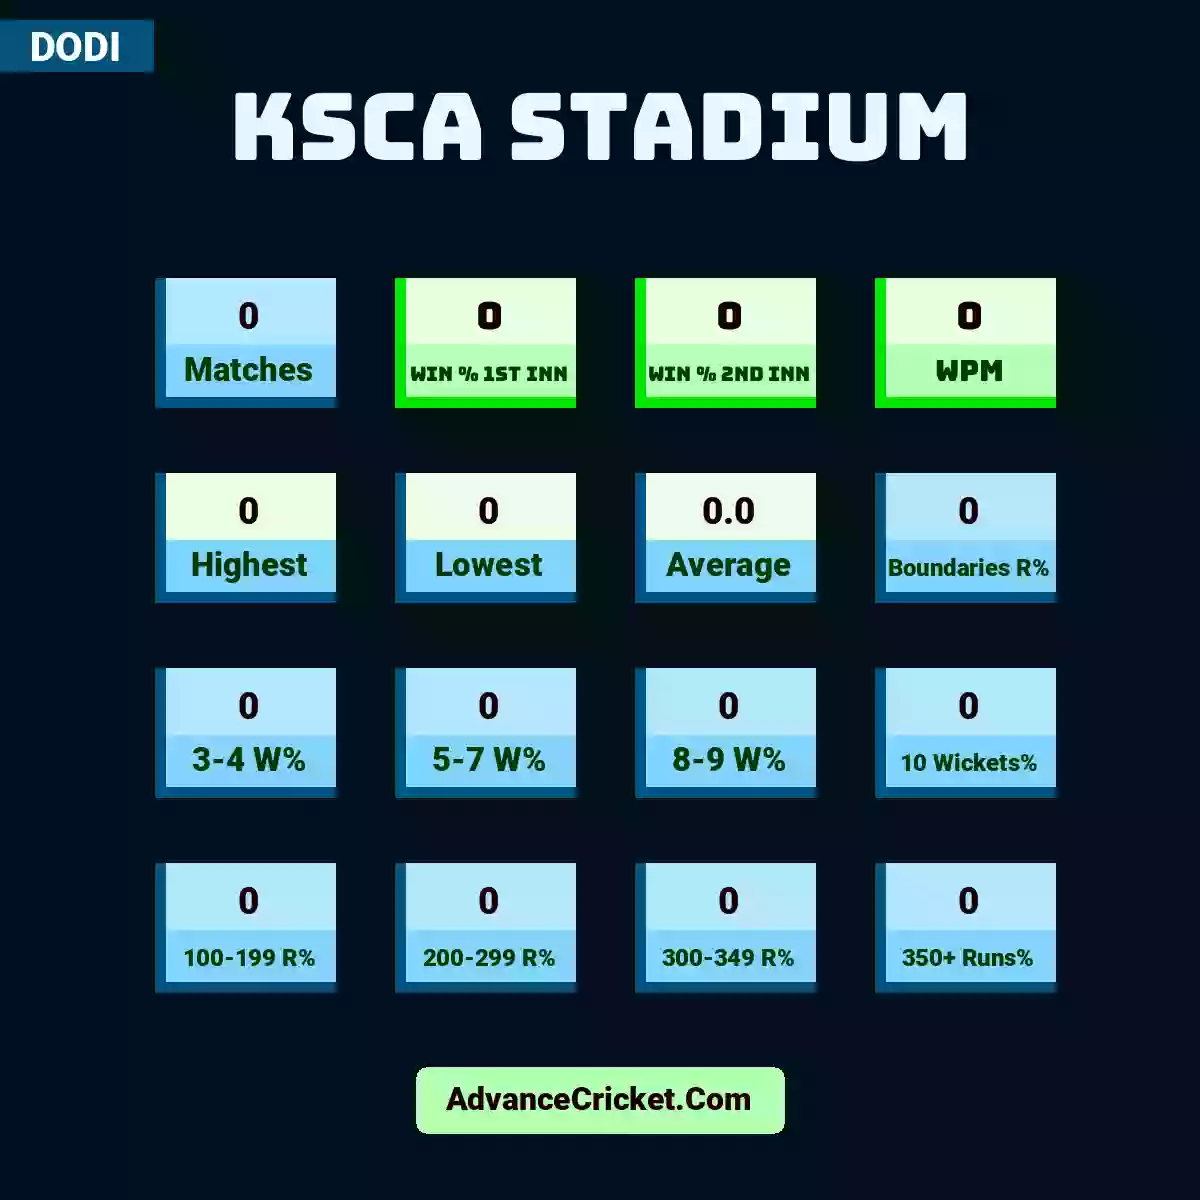 Image showing KSCA Stadium with Matches: 0, Win % 1st Inn: 0, Win % 2nd Inn: 0, WPM: 0, Highest: 0, Lowest: 0, Average: 0.0, Boundaries R%: 0, 3-4 W%: 0, 5-7 W%: 0, 8-9 W%: 0, 10 Wickets%: 0, 100-199 R%: 0, 200-299 R%: 0, 300-349 R%: 0, 350+ Runs%: 0.